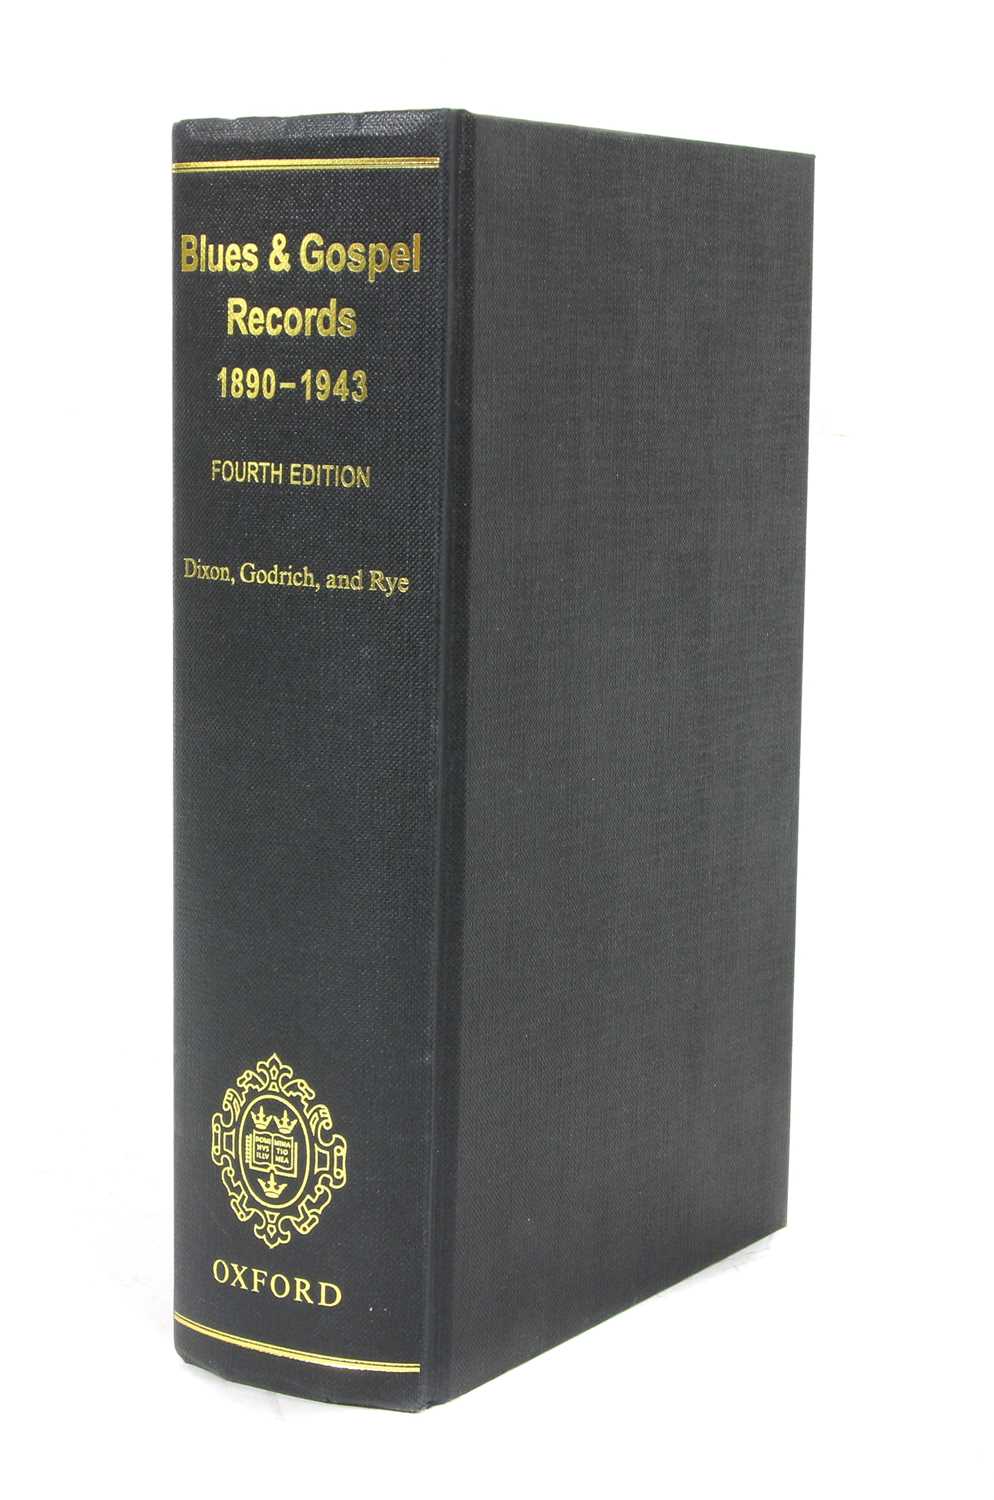 Lot 109 - Blues & Gospel Records 1890-1943 Fourth Edition